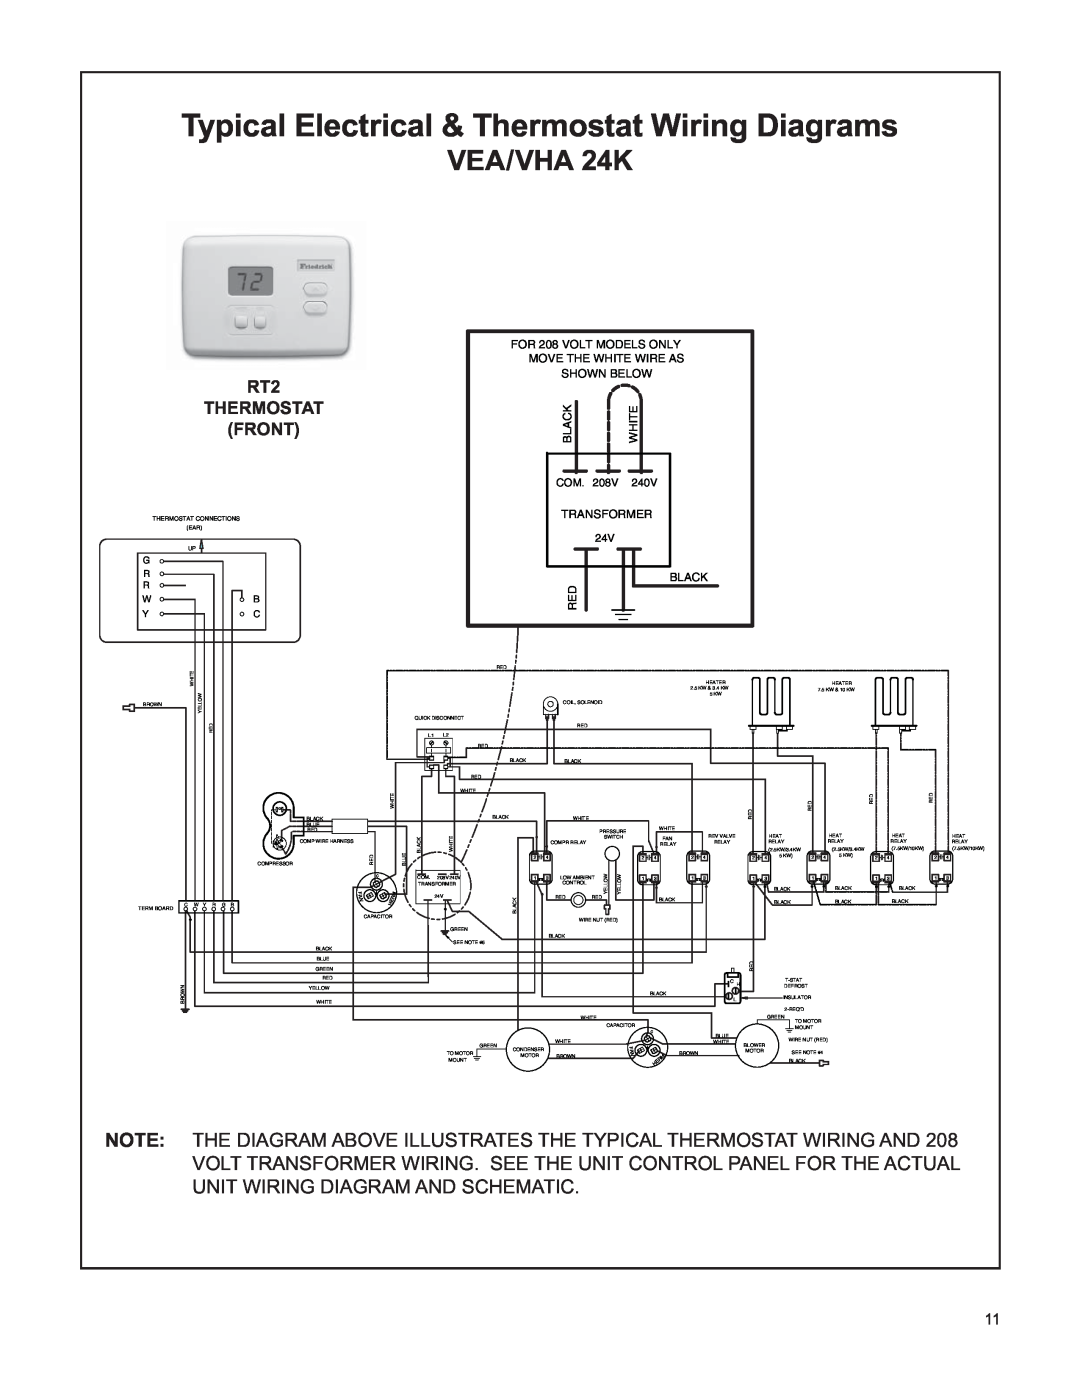 Friedrich V(E Typical Electrical & Thermostat Wiring Diagrams, VEA/VHA 24K, Shown Below, Black, White, Transformer, Com 